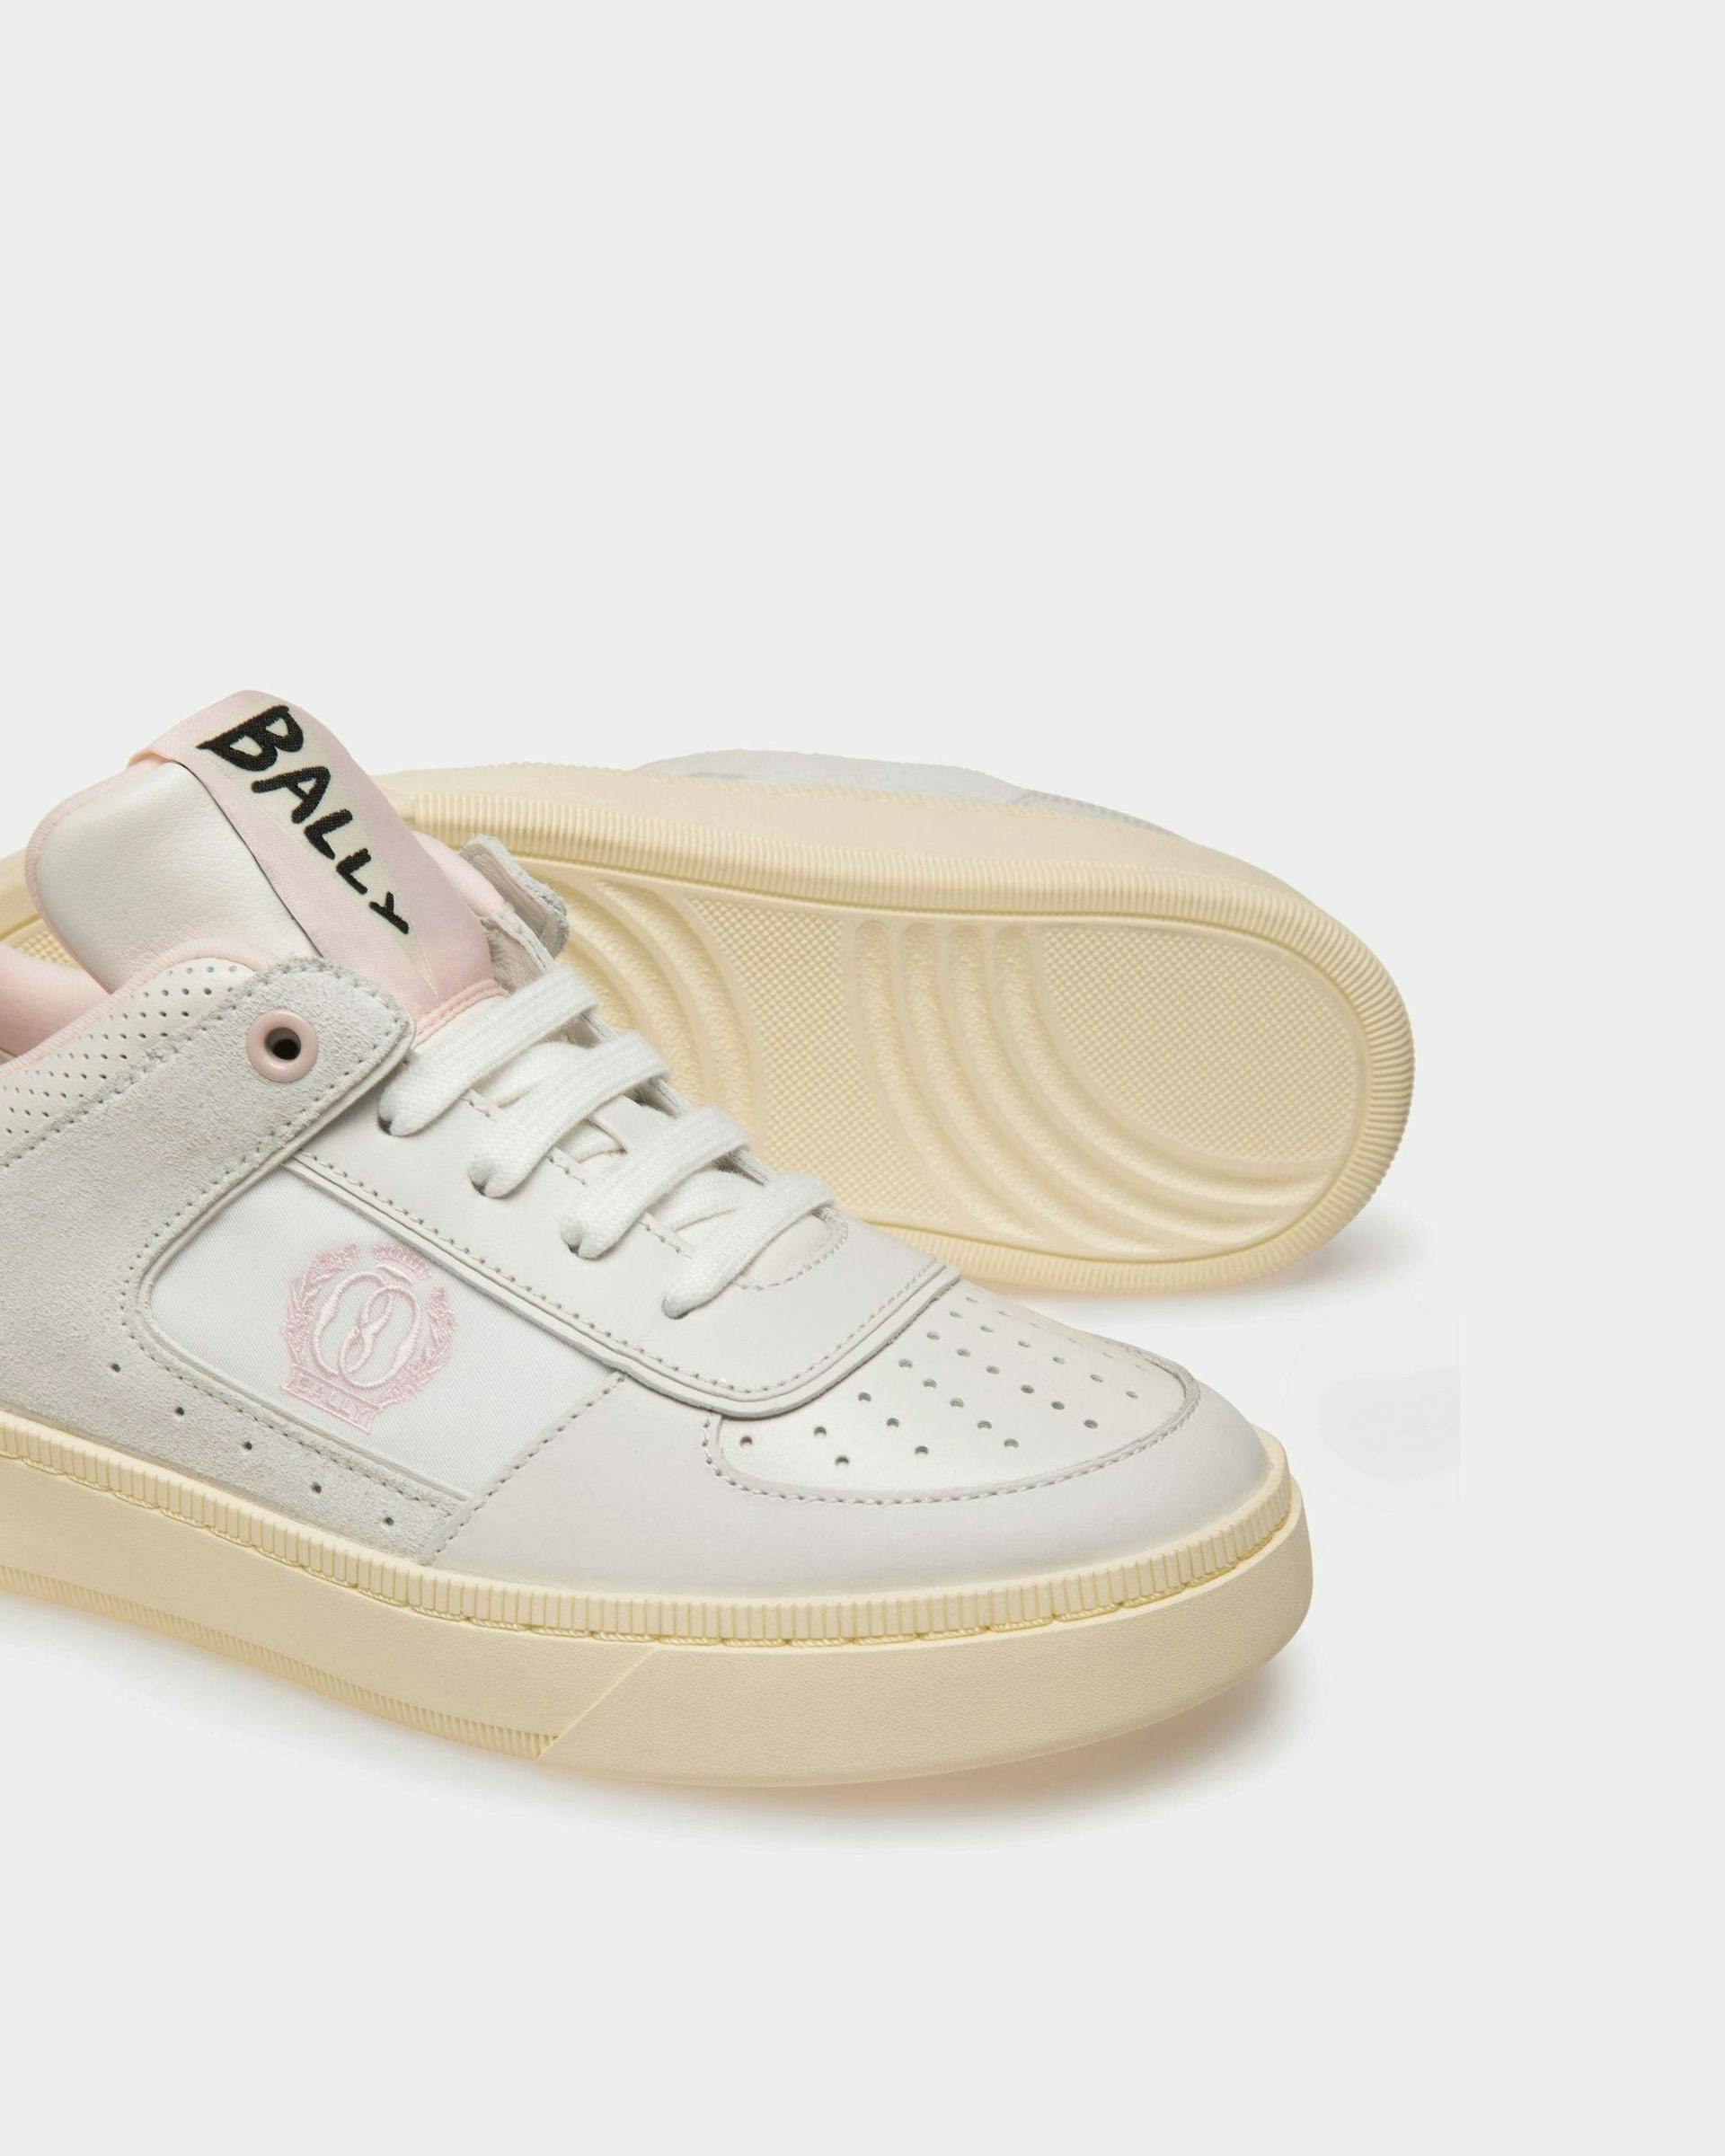 Sneakers Raise Cuir blanc et rose - Femme - Bally - 04